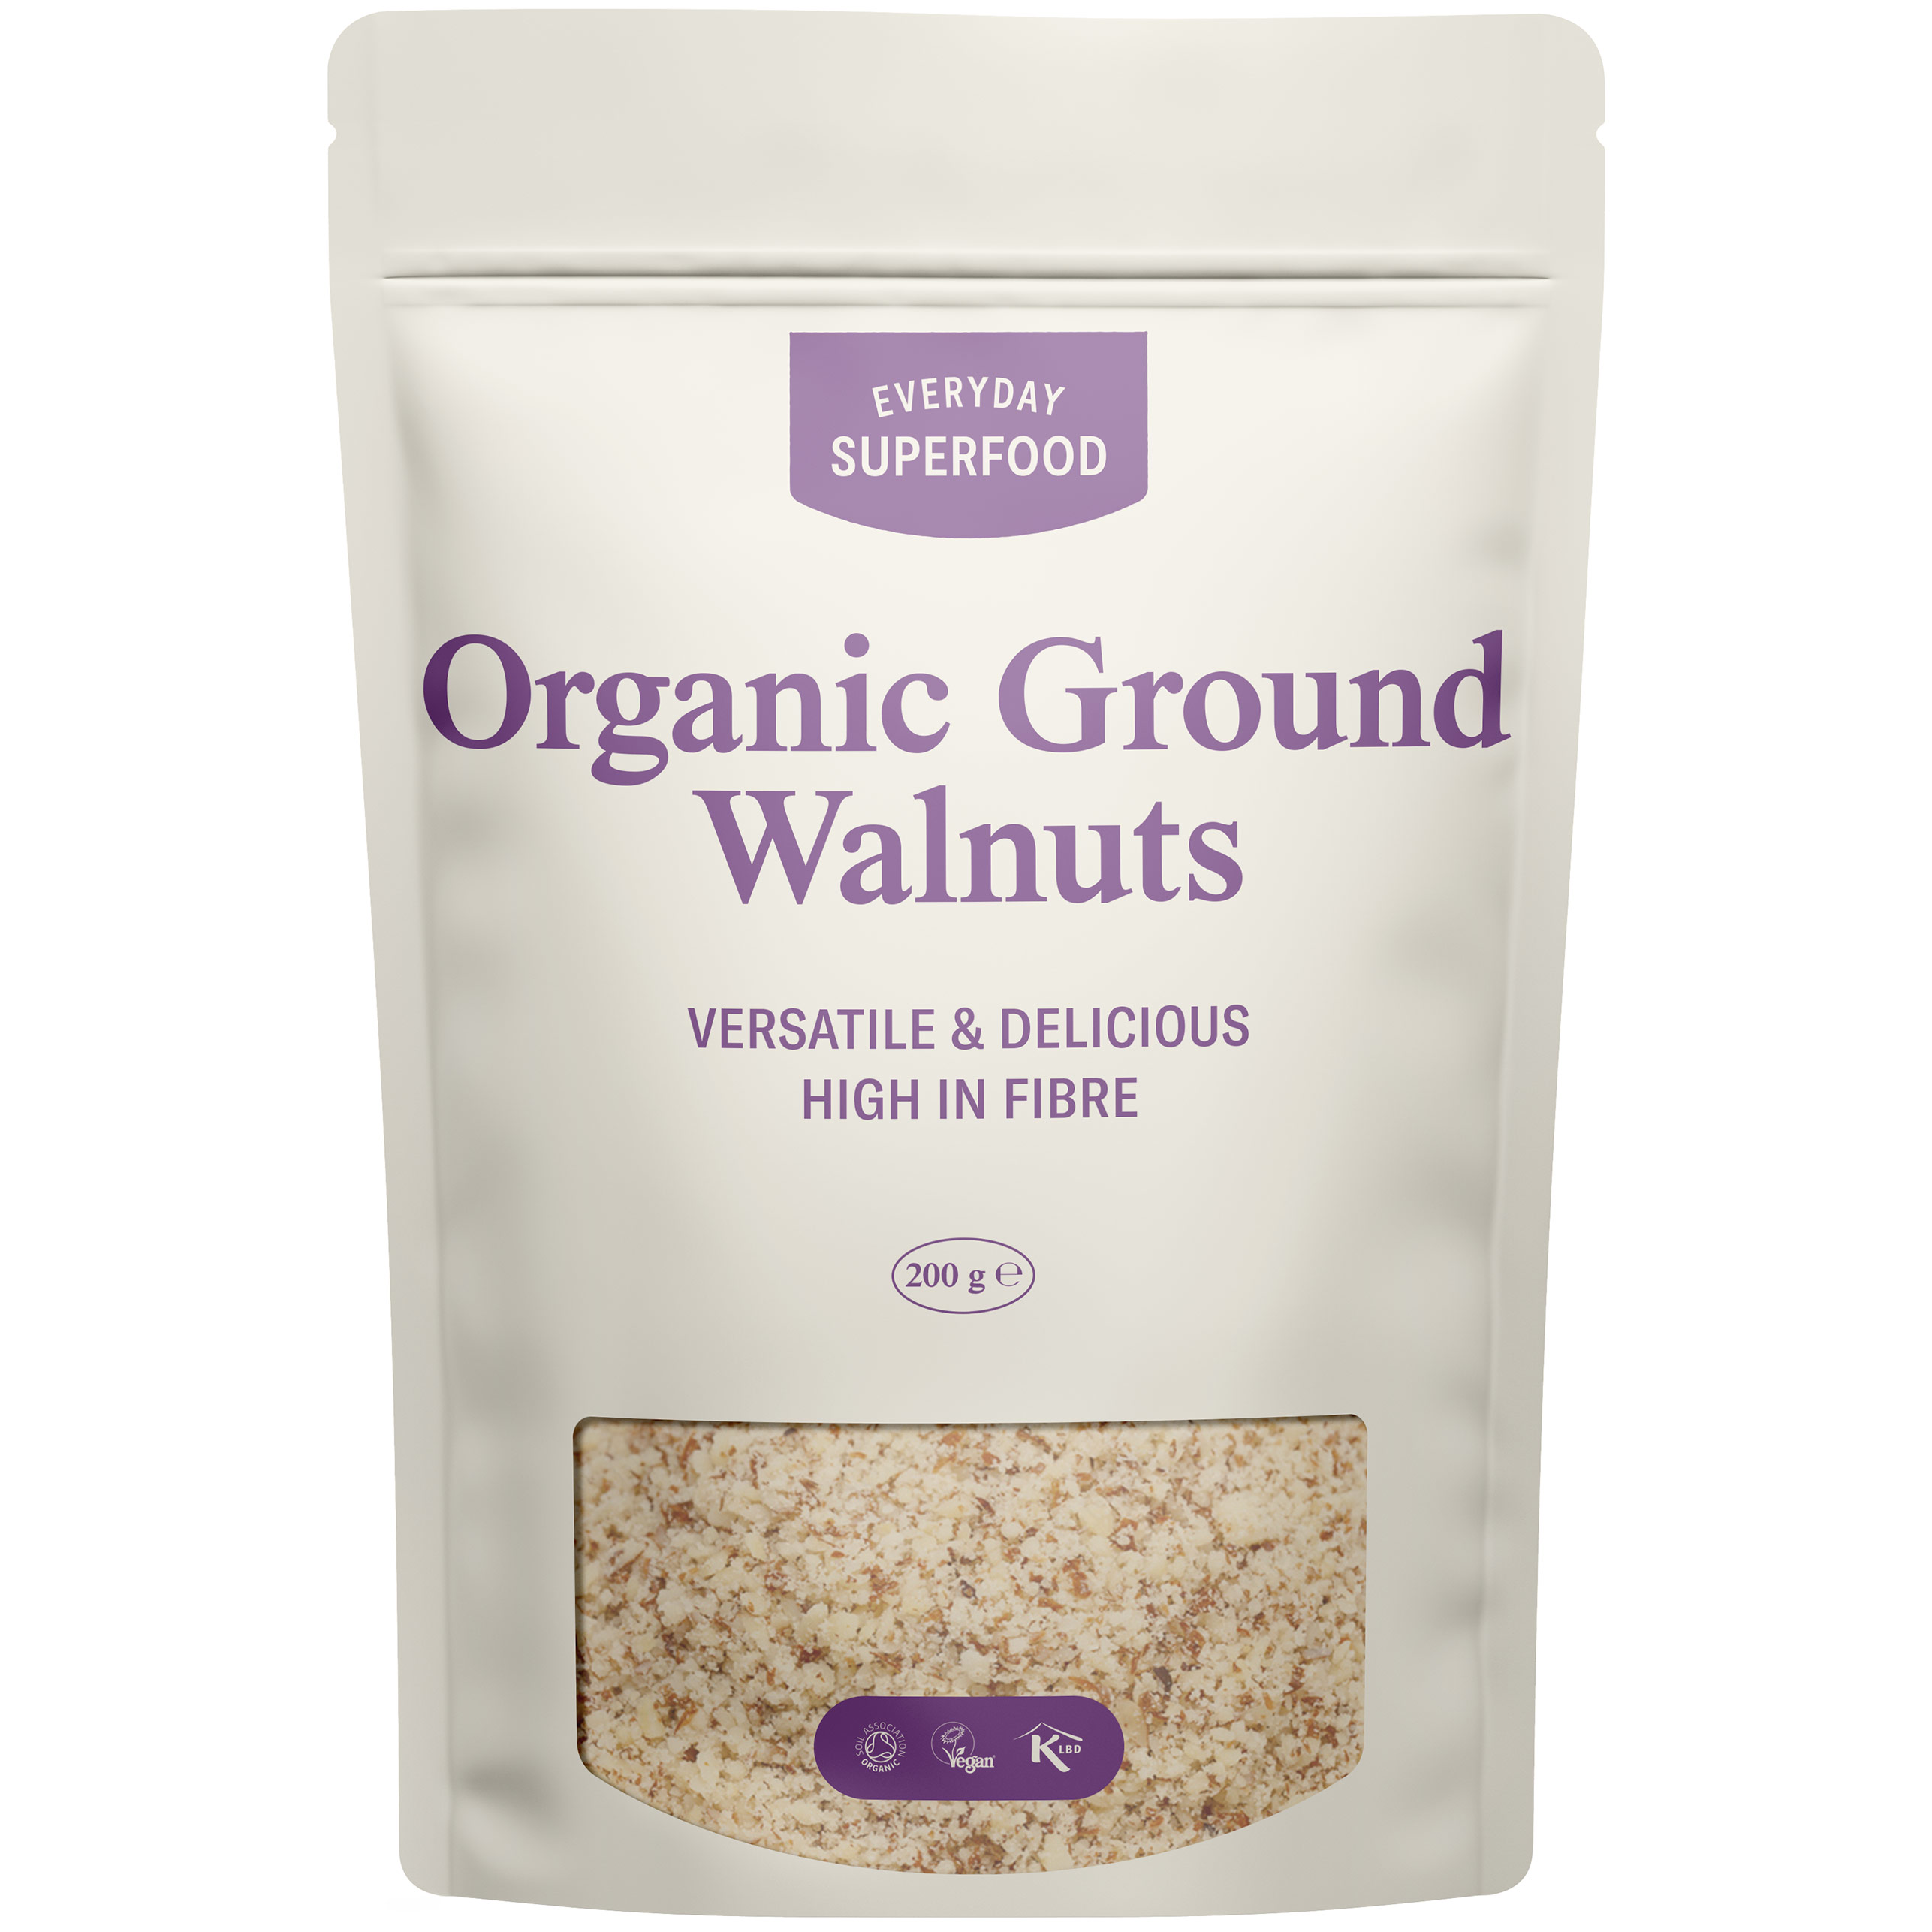 Organic Ground Walnuts